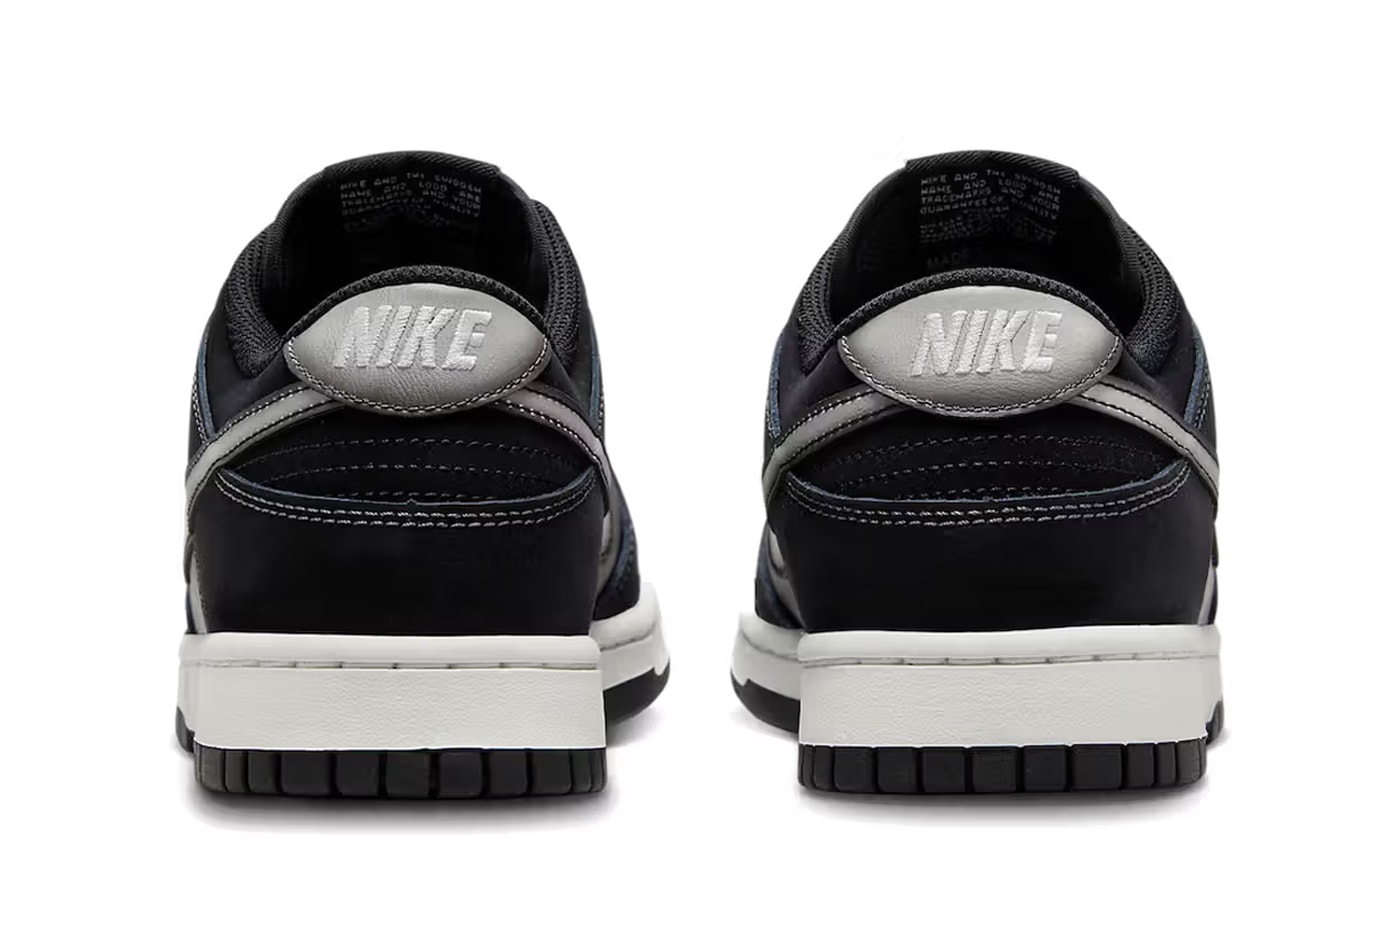 Nike Dunk Low Airbrushed Swoosh Shoes Just Do It Michael Jordan Basketball Fashion Streetwear Black White Rubber Midsole 